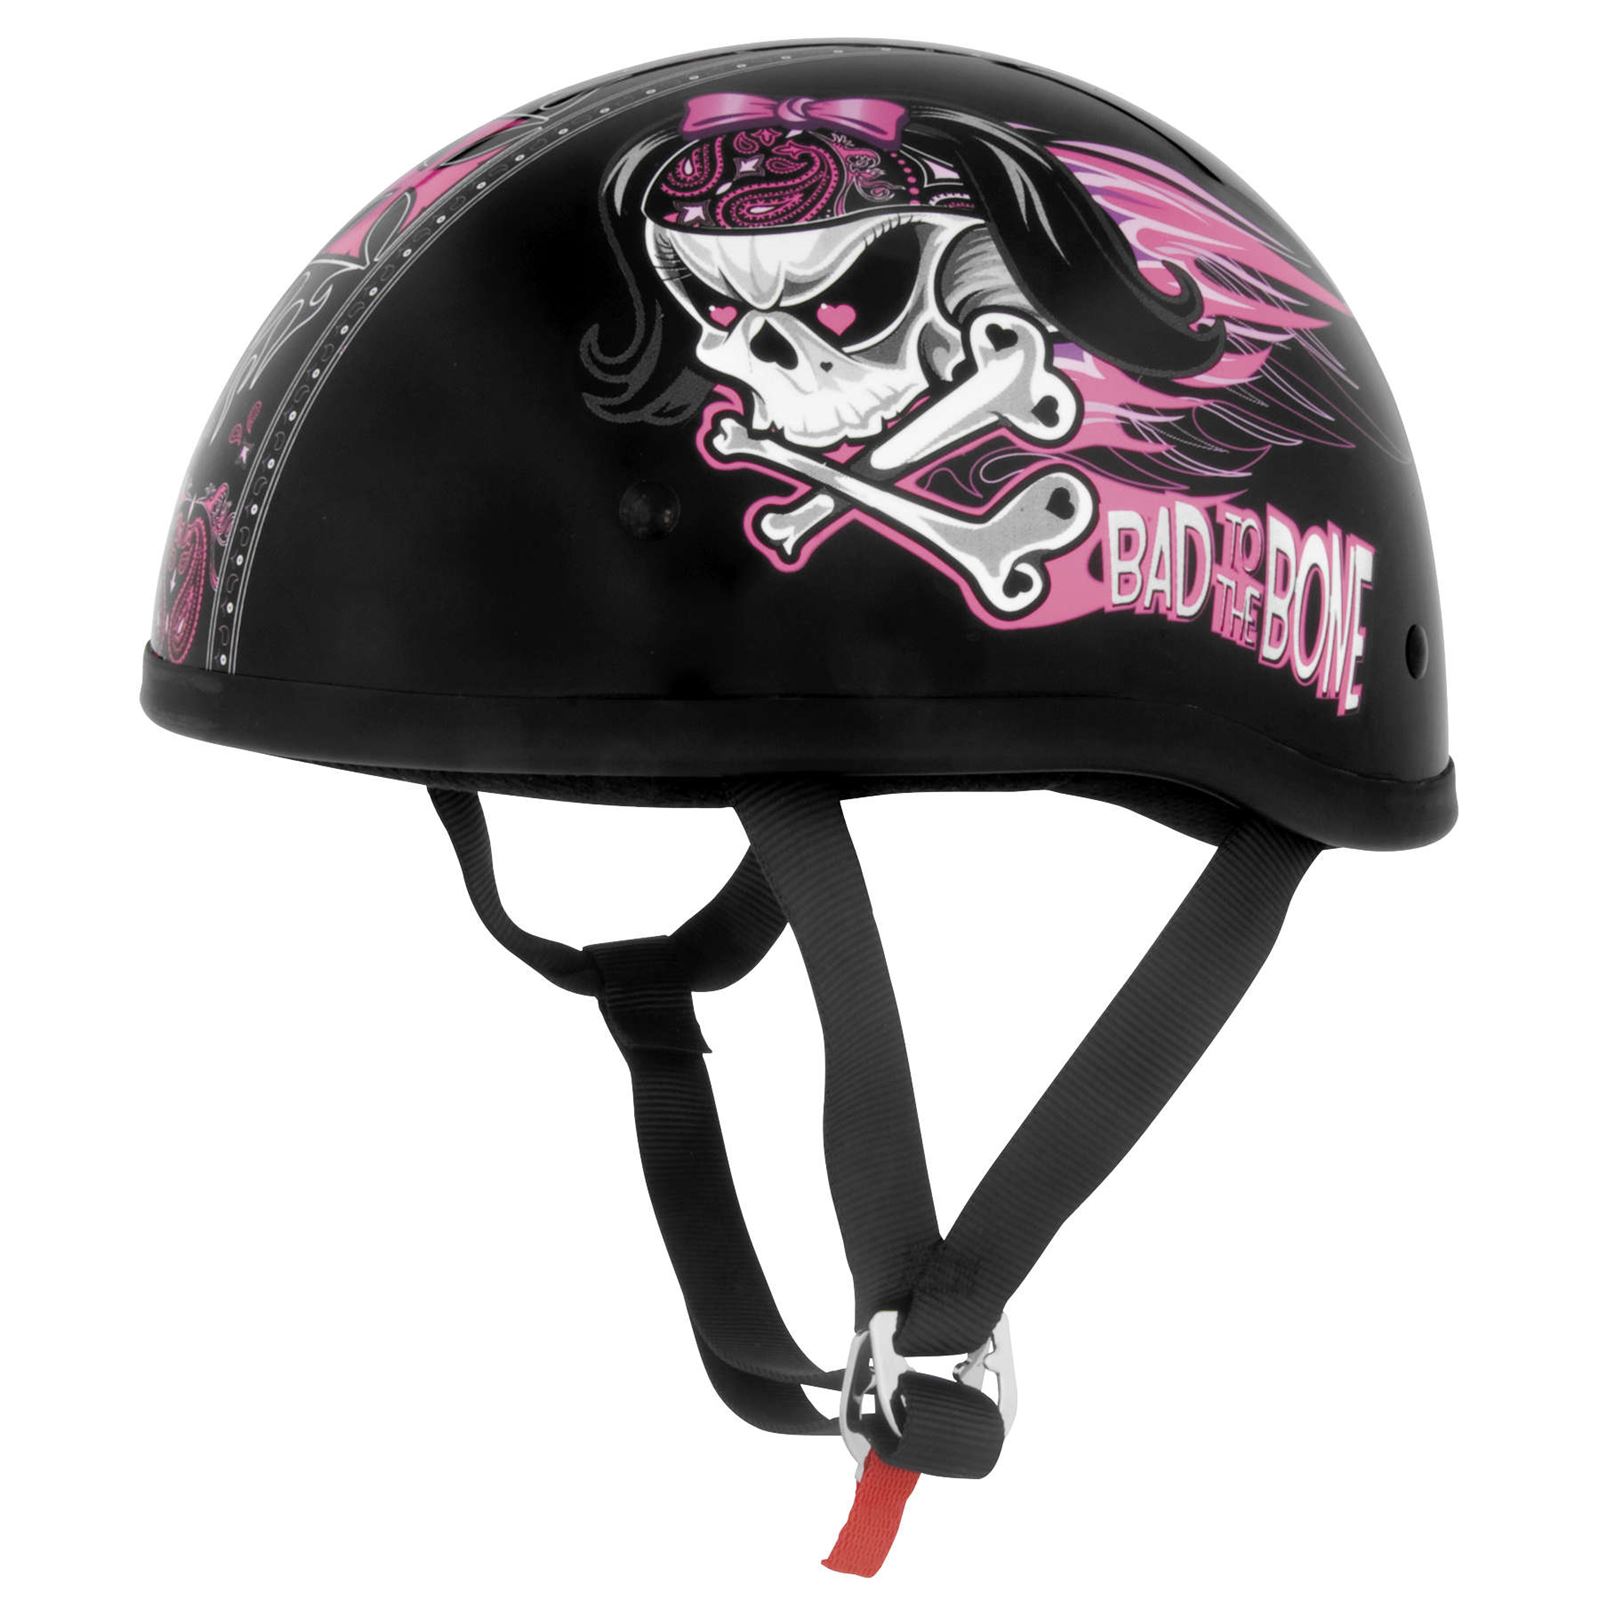 Skid Lid Helmets Original Lethal Threat Bad to the Bone Helmet - OPEN BOX